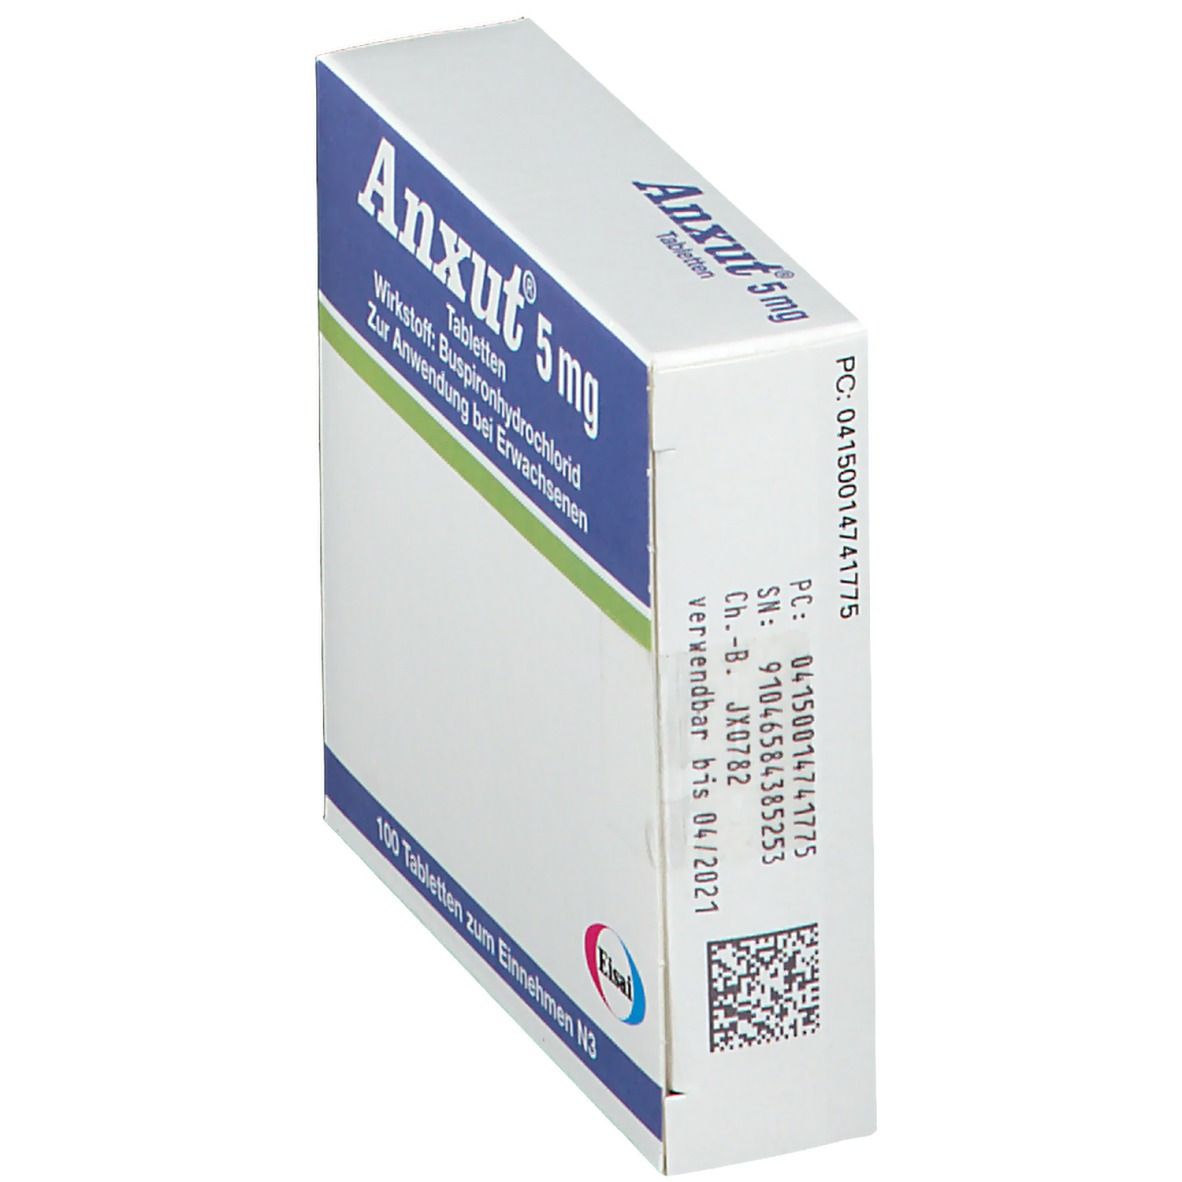 Anxut® 5 mg